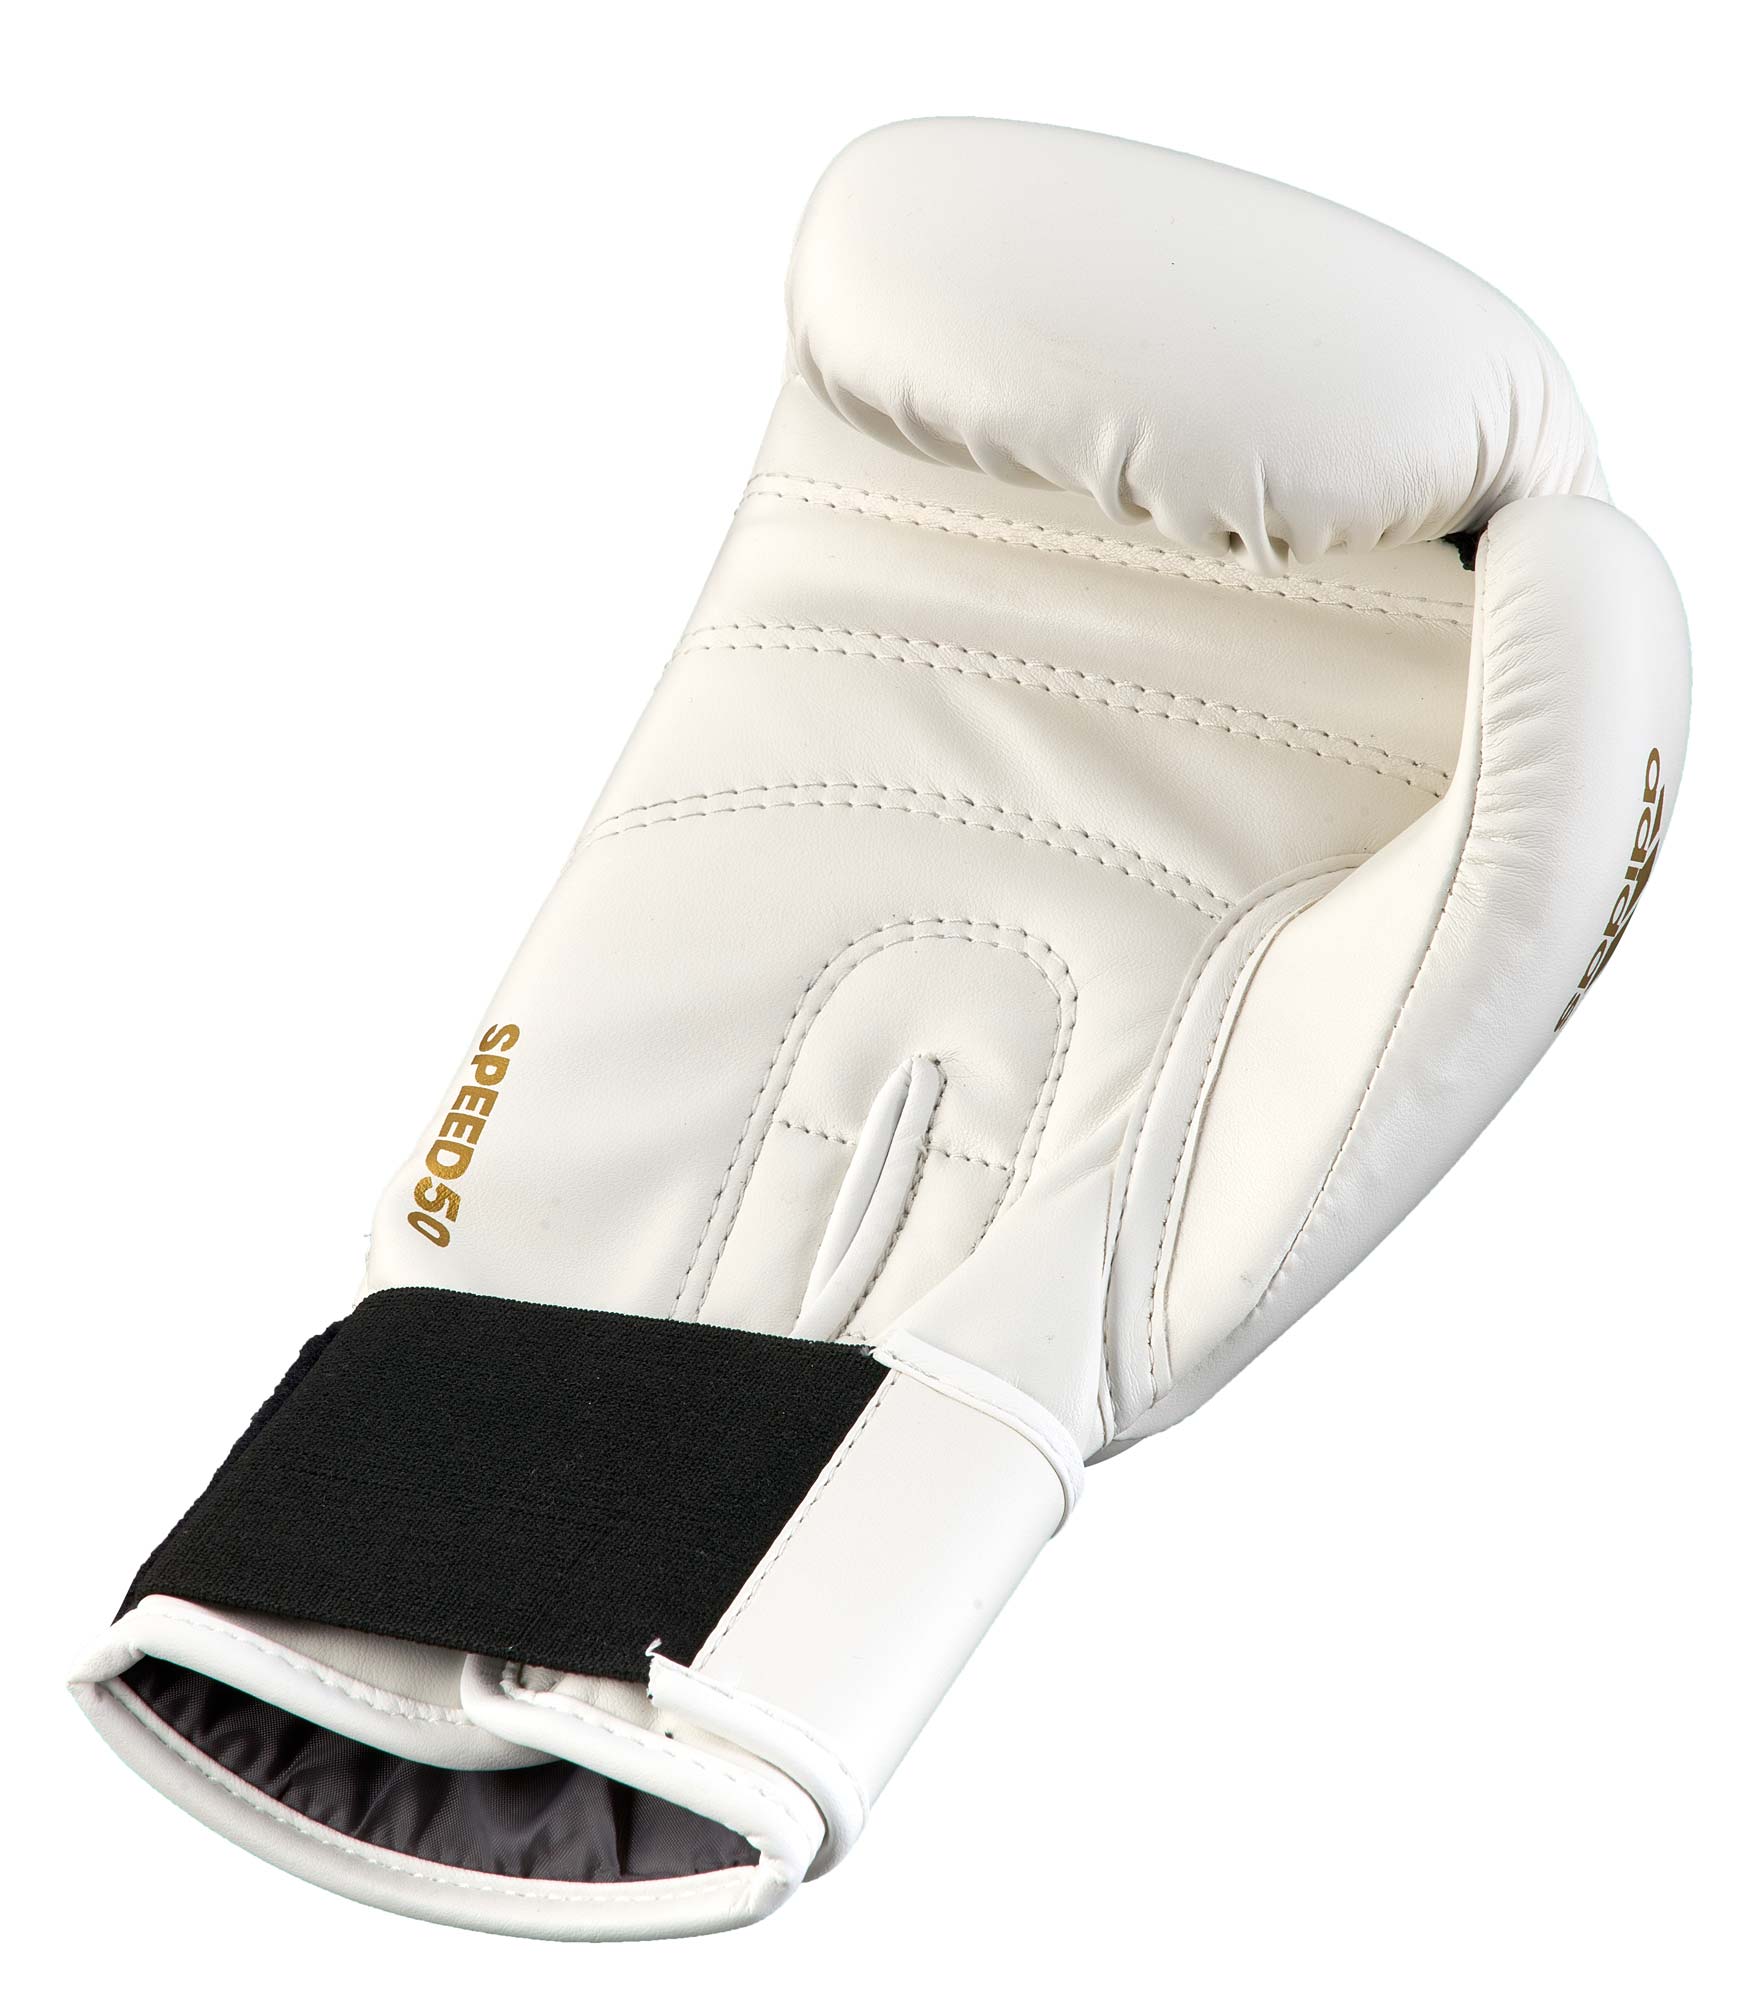 Boxhandschuh Speed | Onlineshop | | Kampfsport weiß/gold Schutzausrüstung Sportbanditen - | Handschutz 50